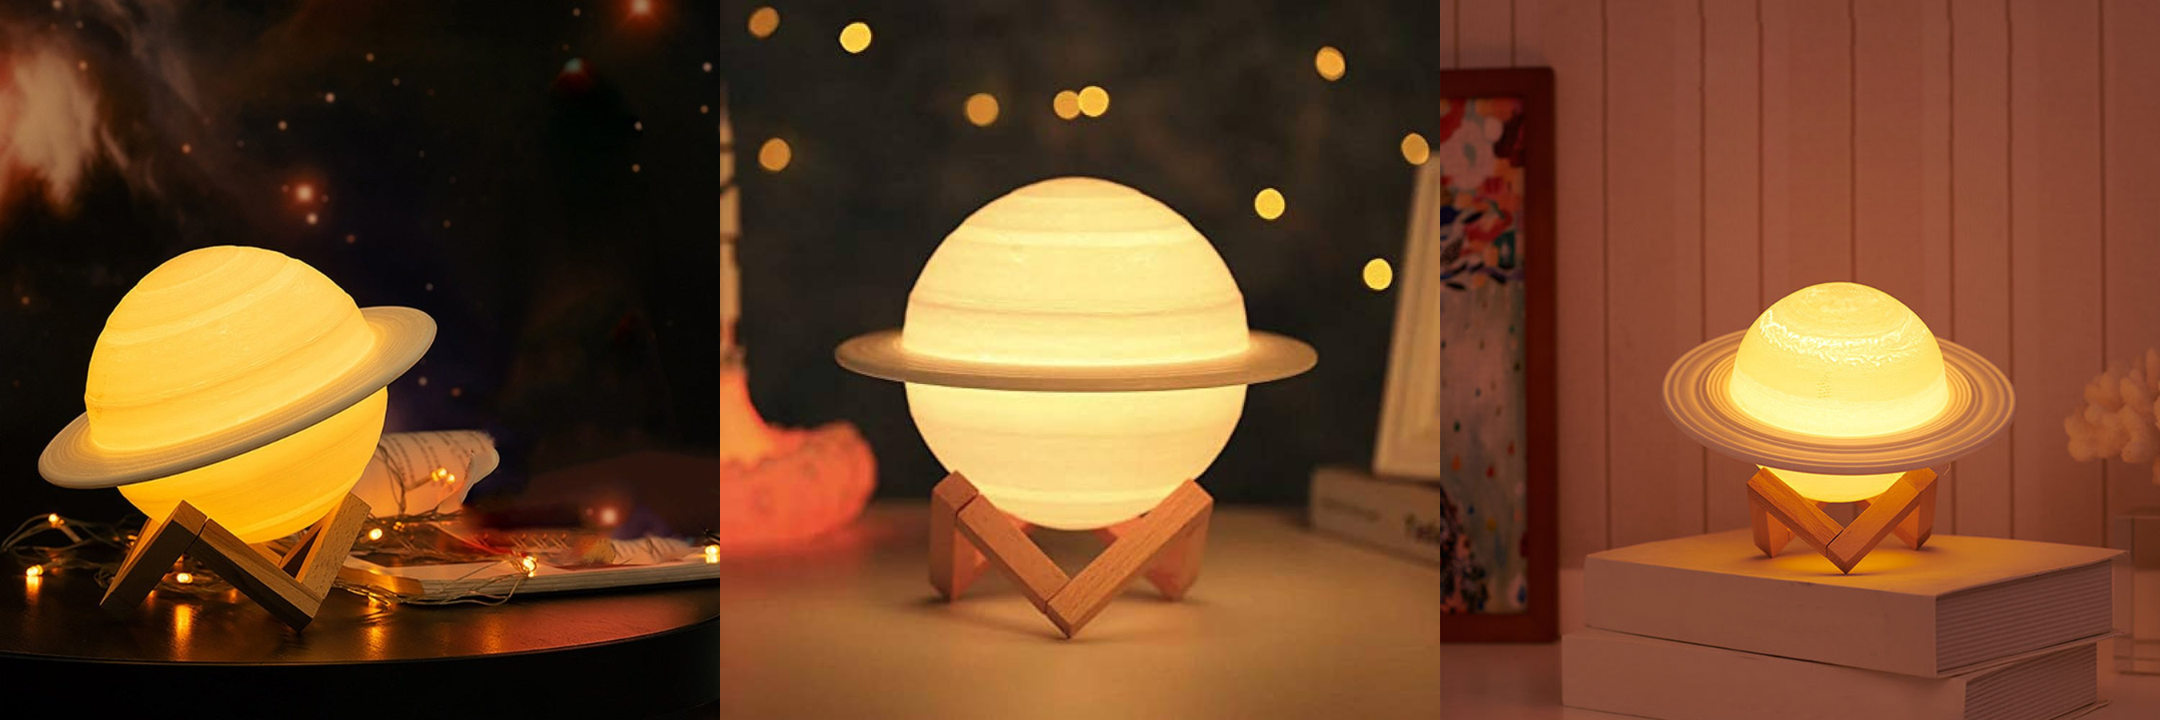 3D Saturn Light Lamp for Diwali decoration